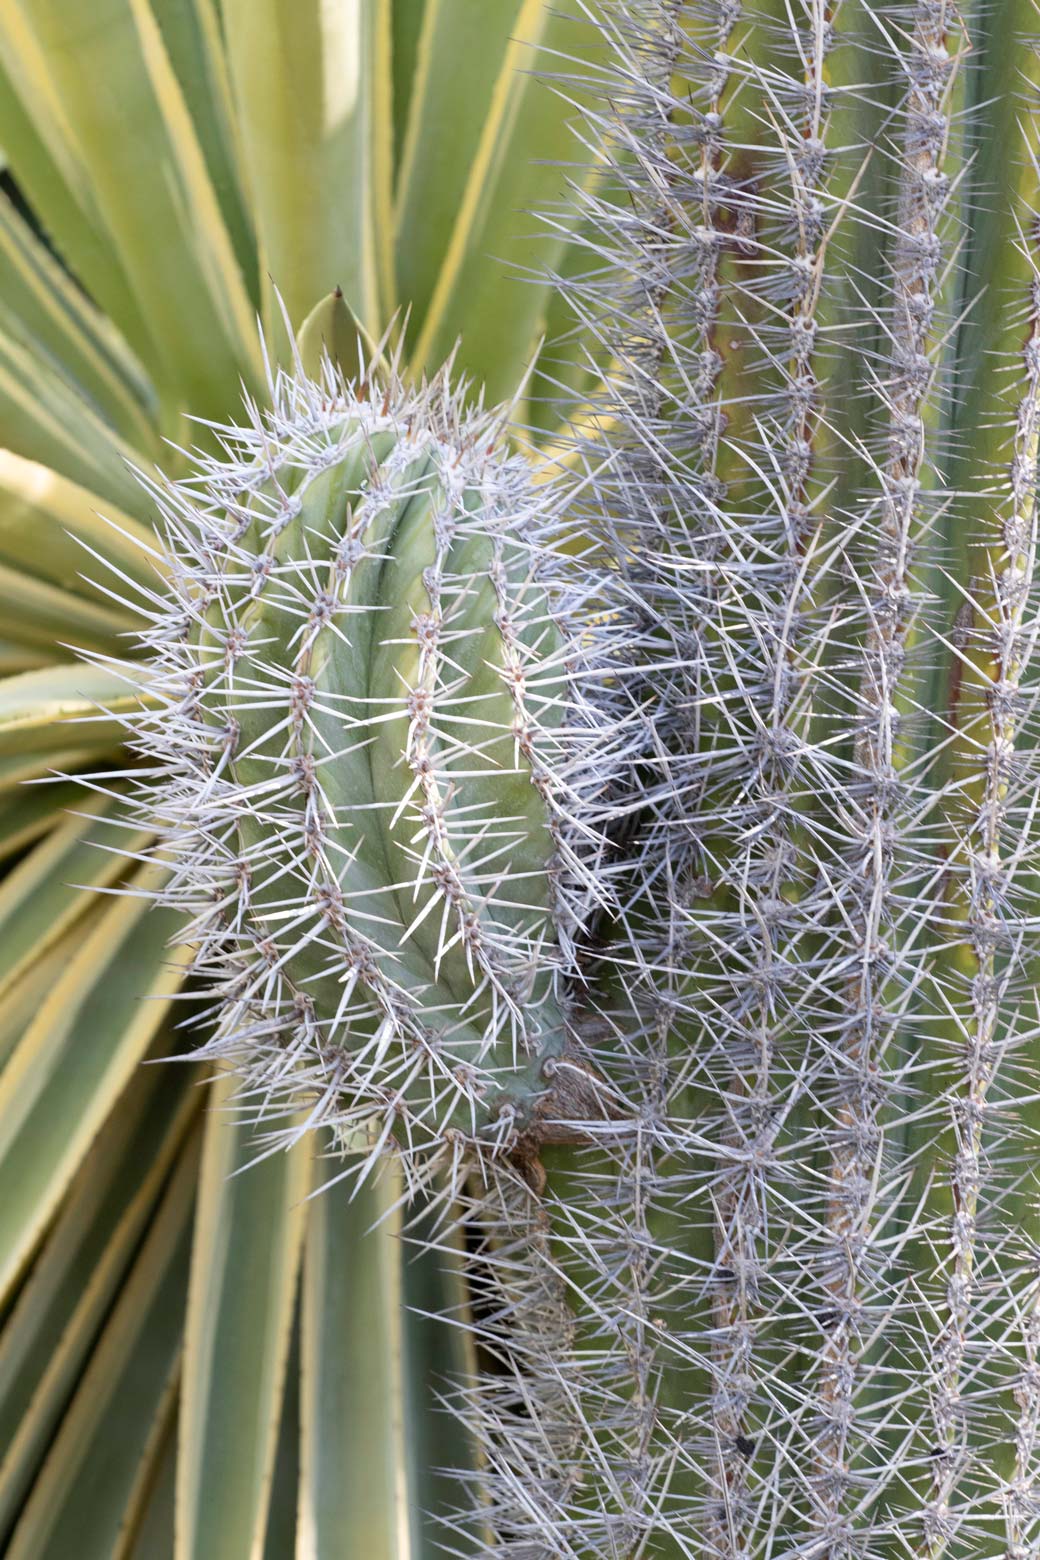 A small arm grows on the trunk of a Cardon cactus.